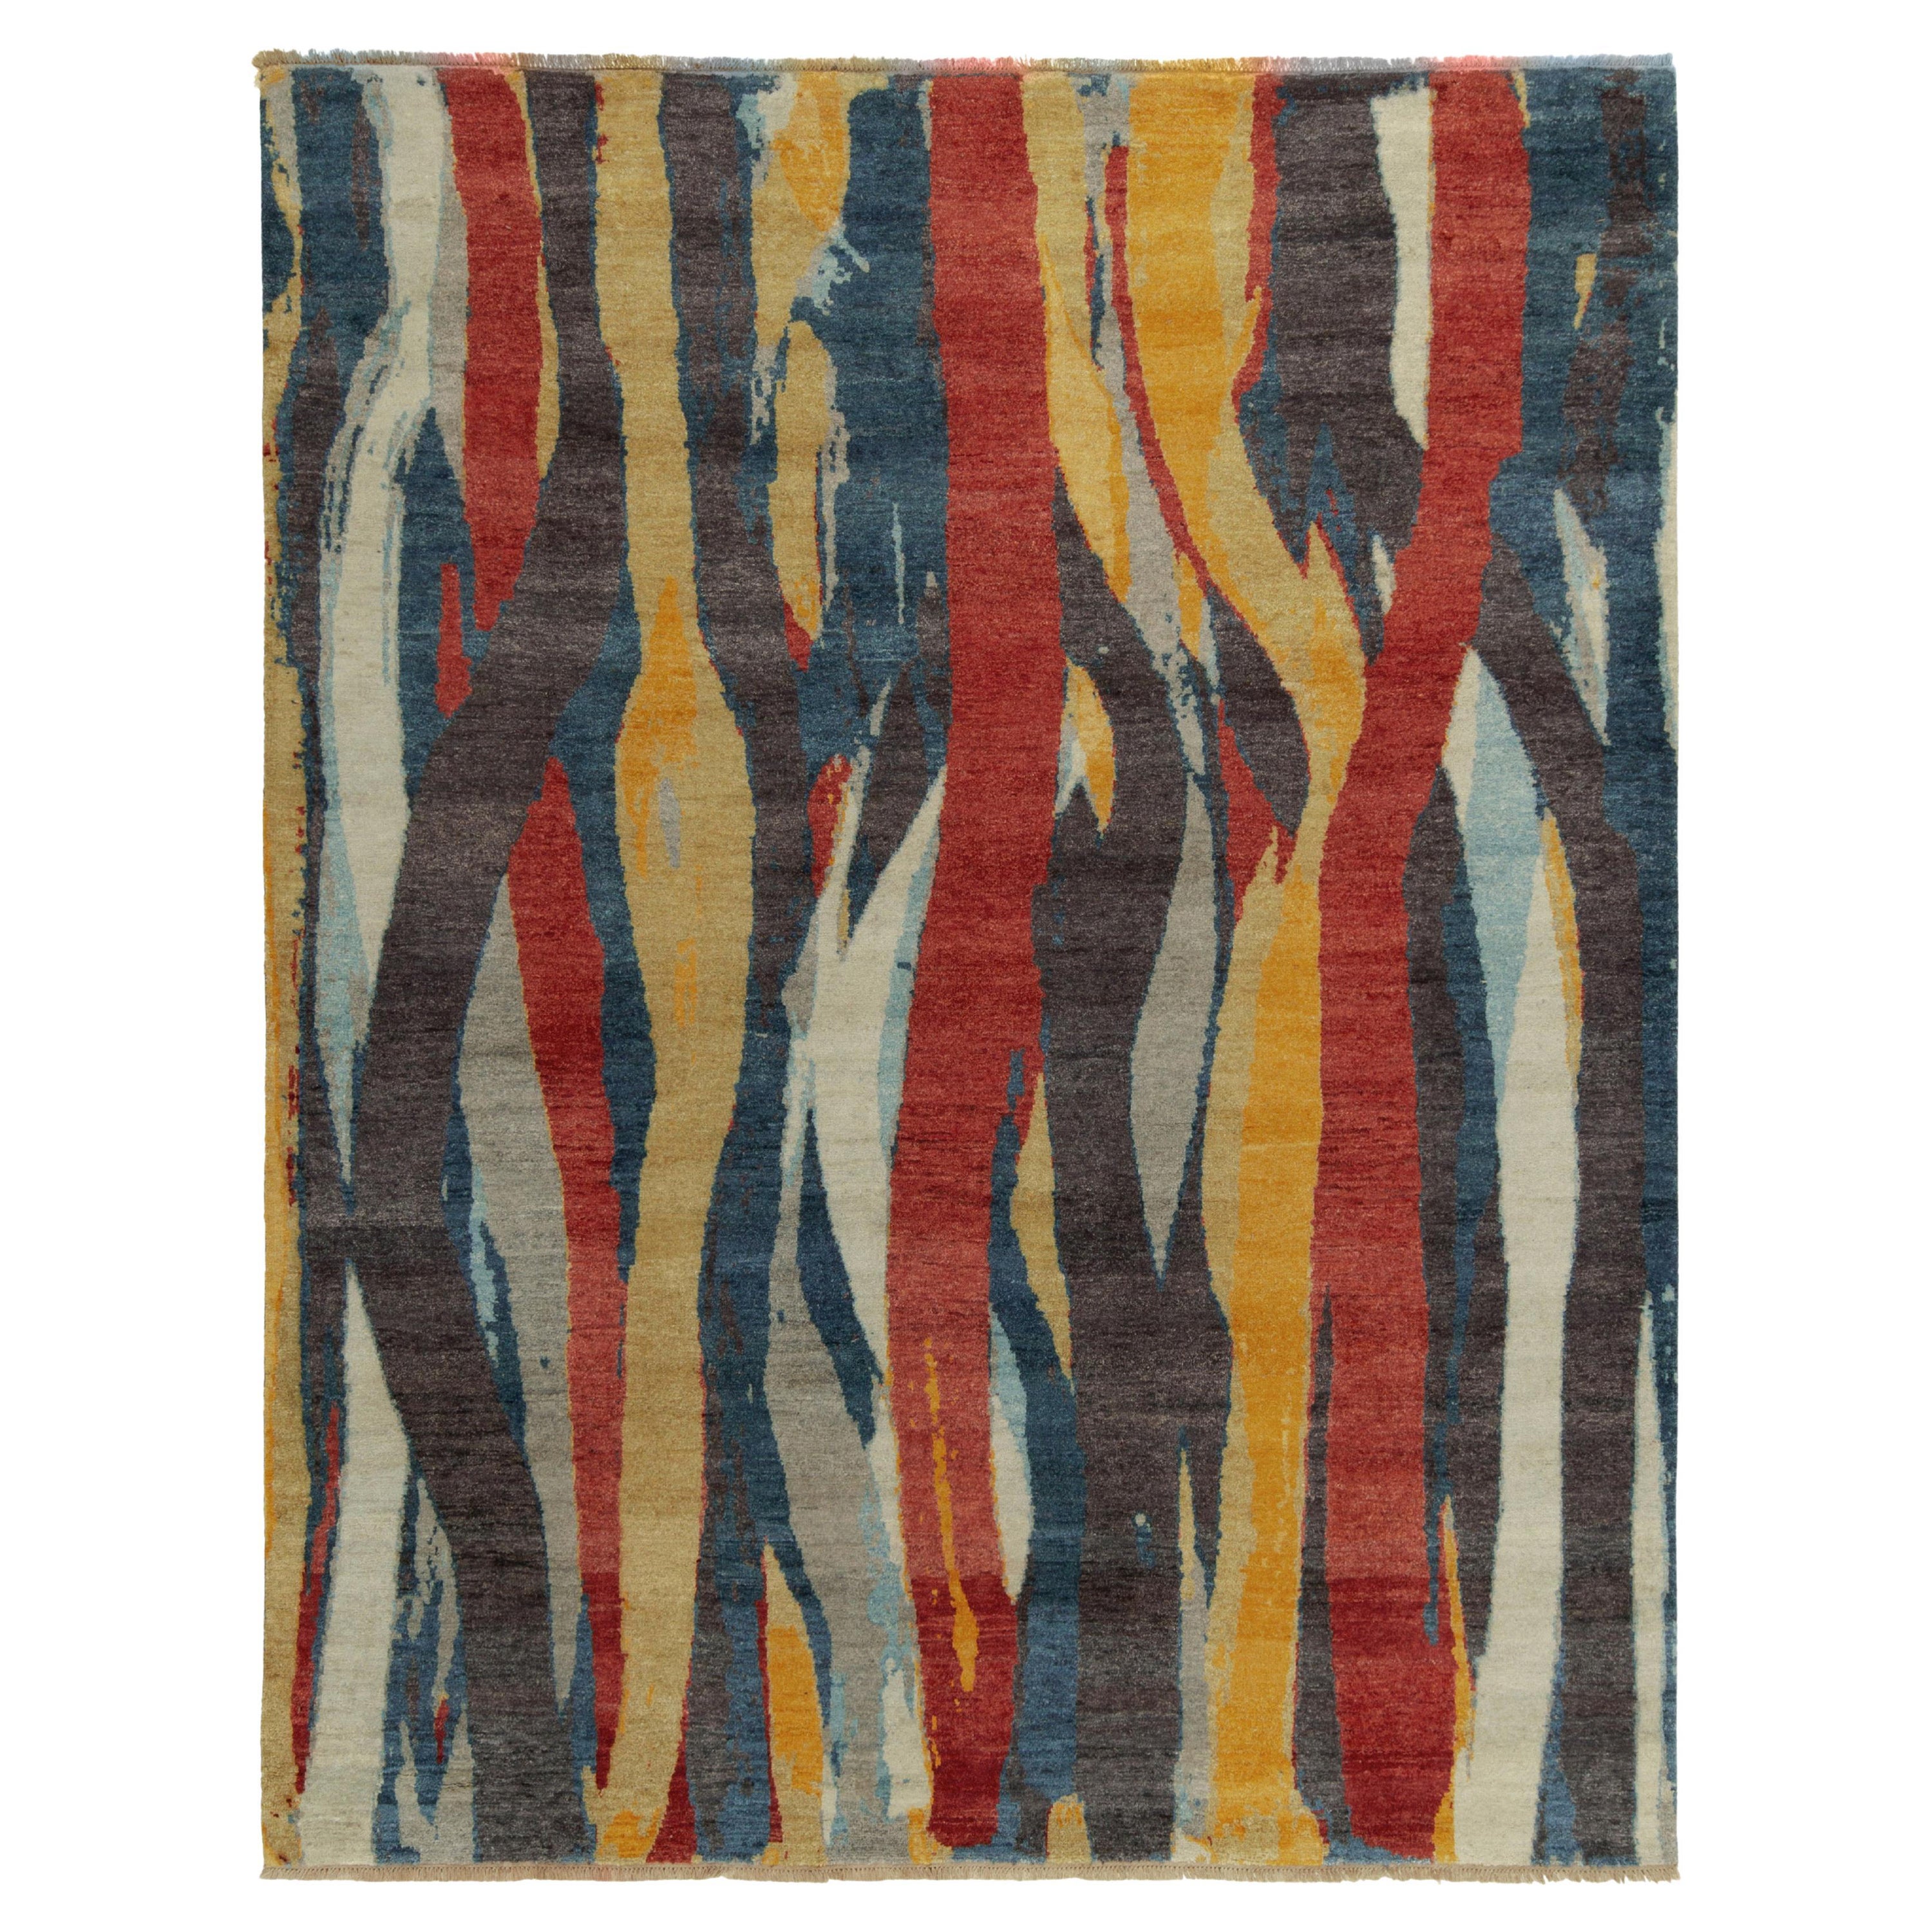 Rug & Kilim's Modern Rug in einem abstrakten Multicolor-Muster